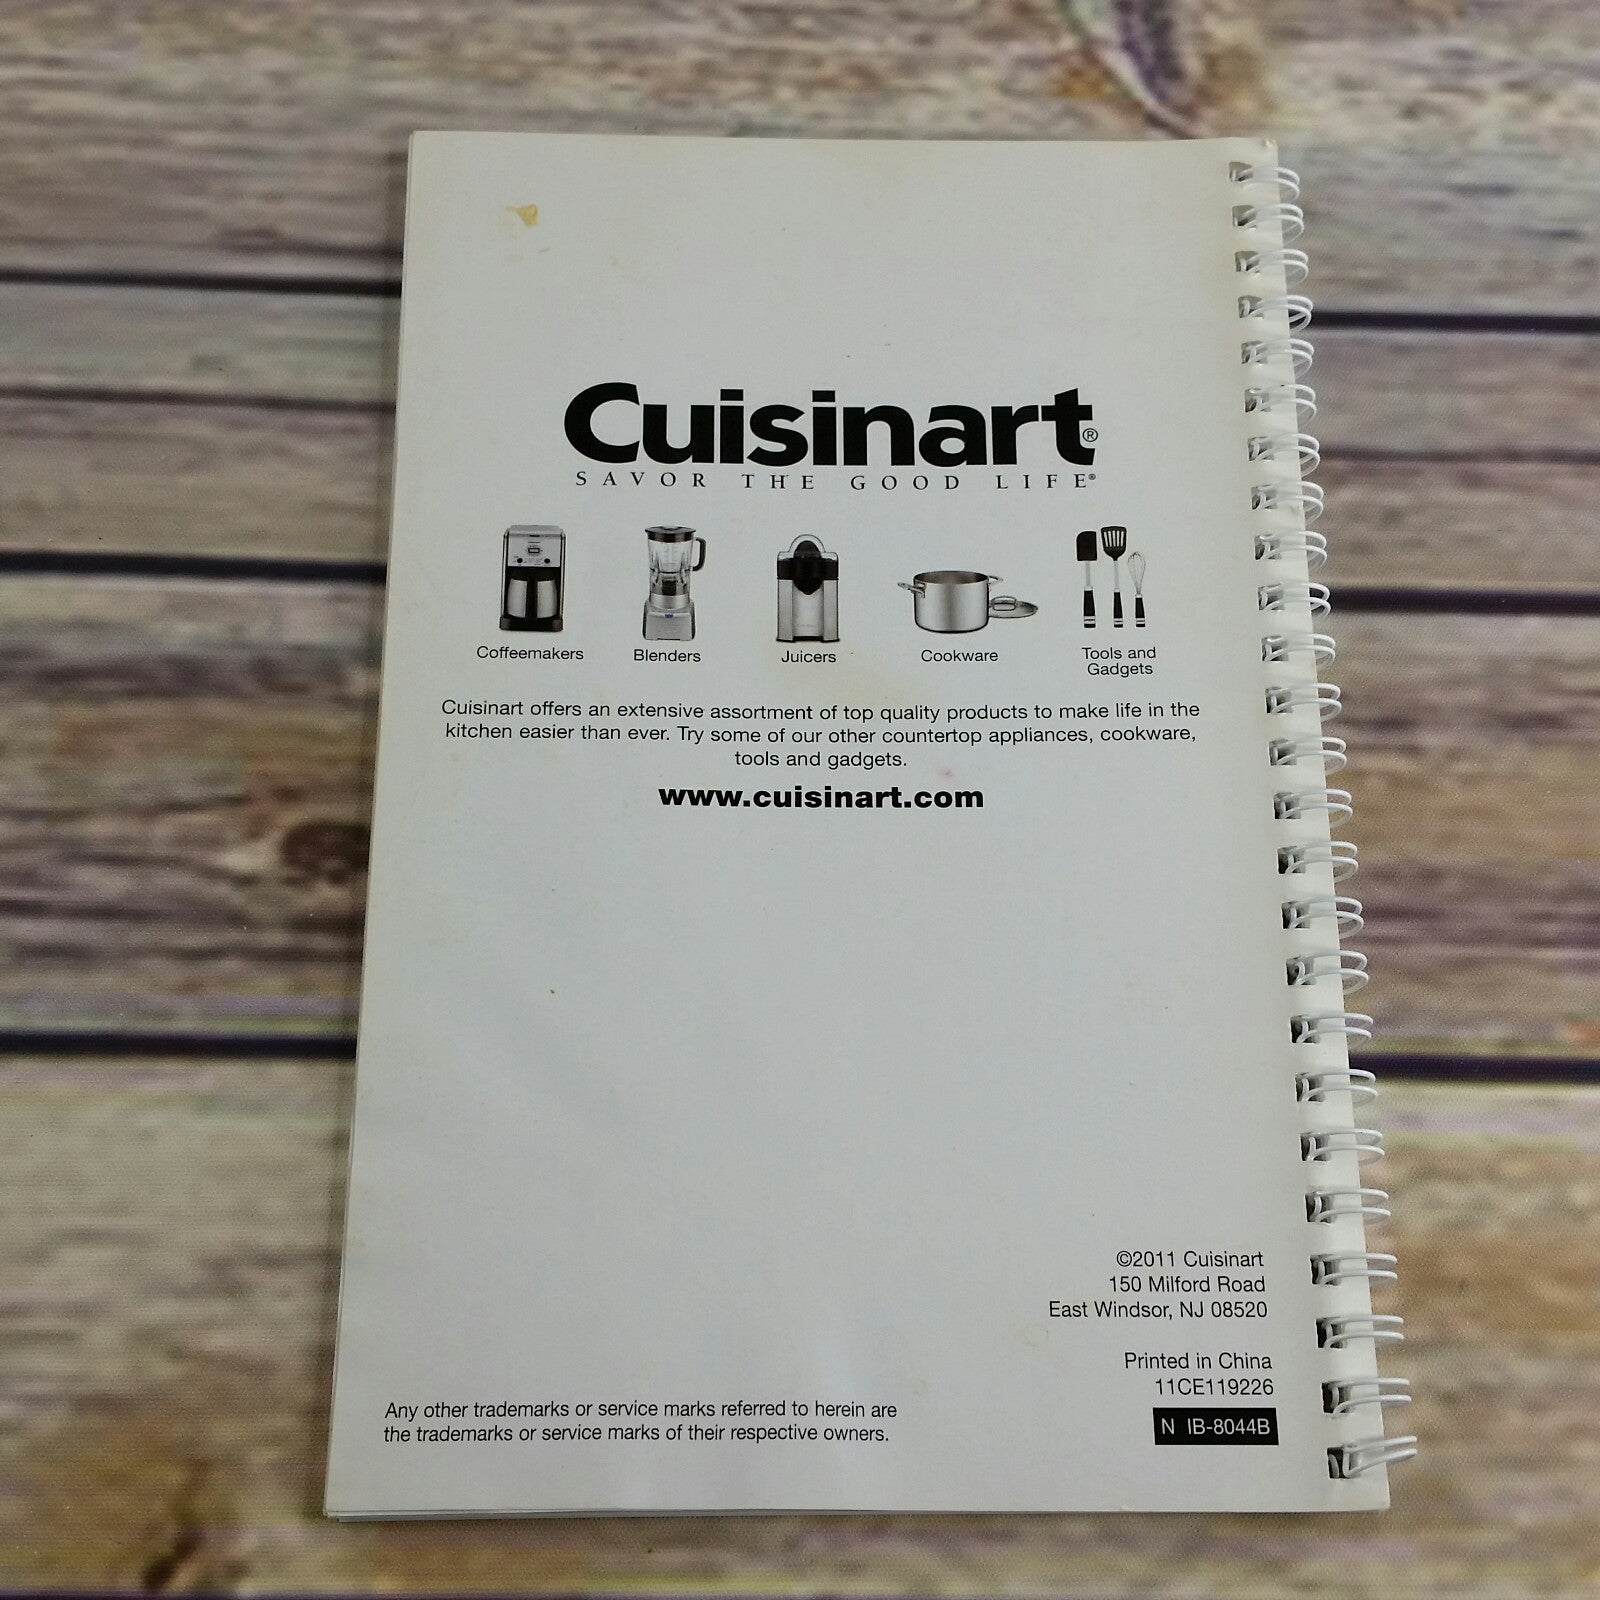 Cuisinart Premier Processor DLC-2009 Owners Manual Recipes Instructions 9 Cup - At Grandma's Table